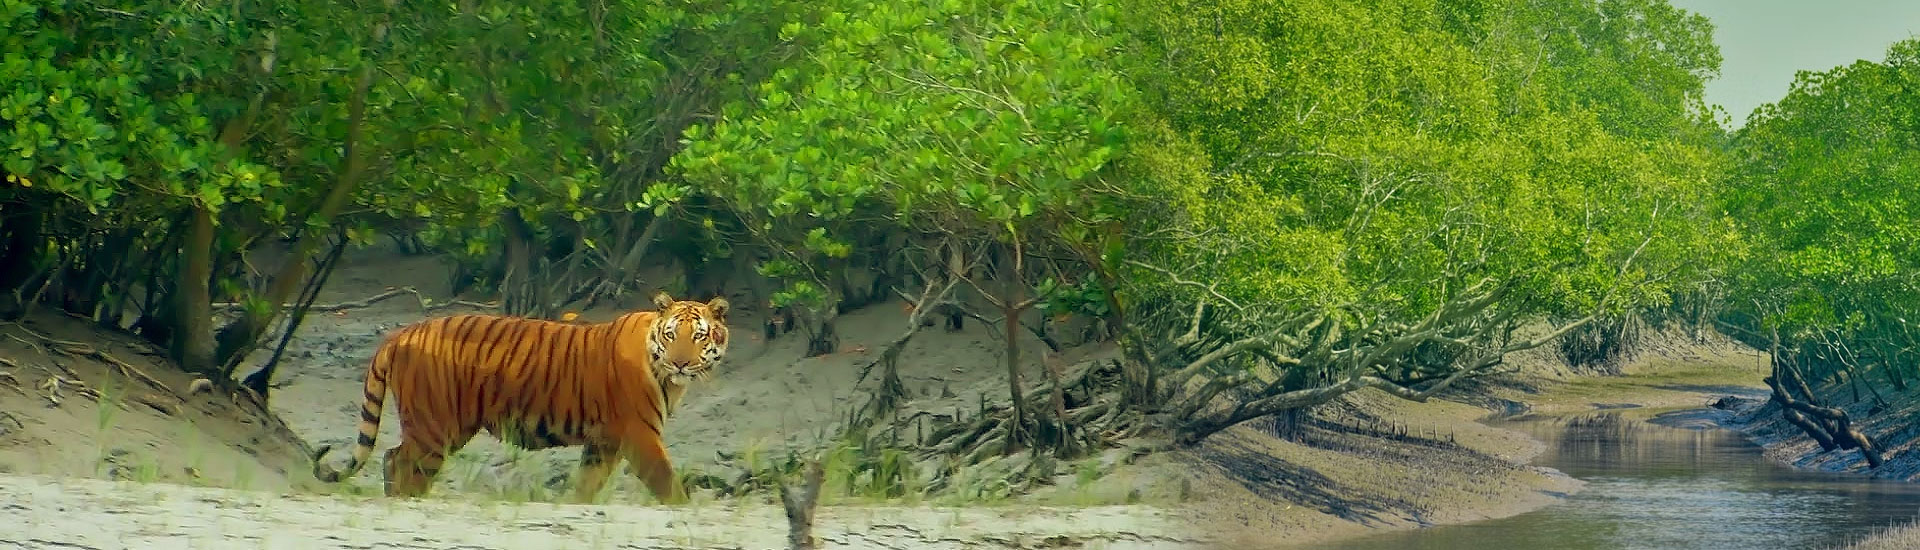 Exploring Paradise in Sundarban 3 Days